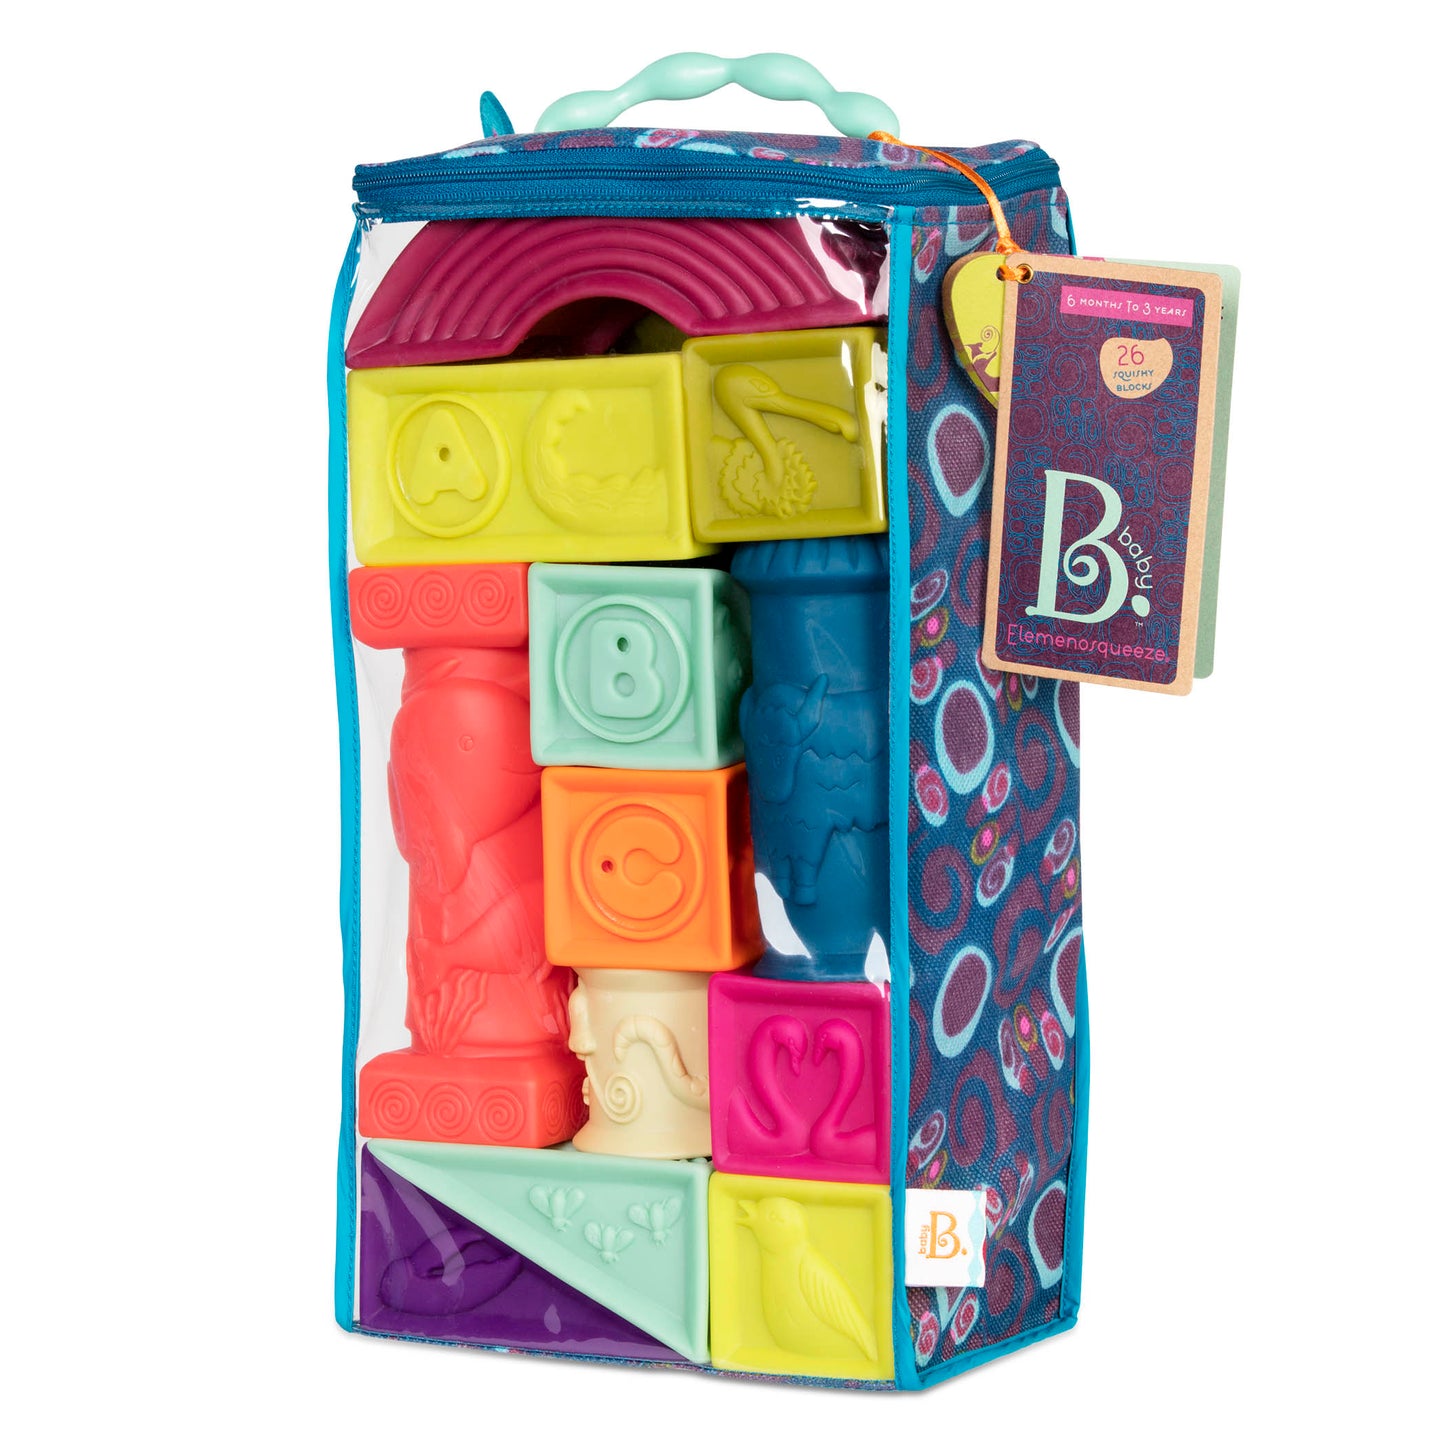 B. Toys - Soft Architectural Blocks (6676218970146)